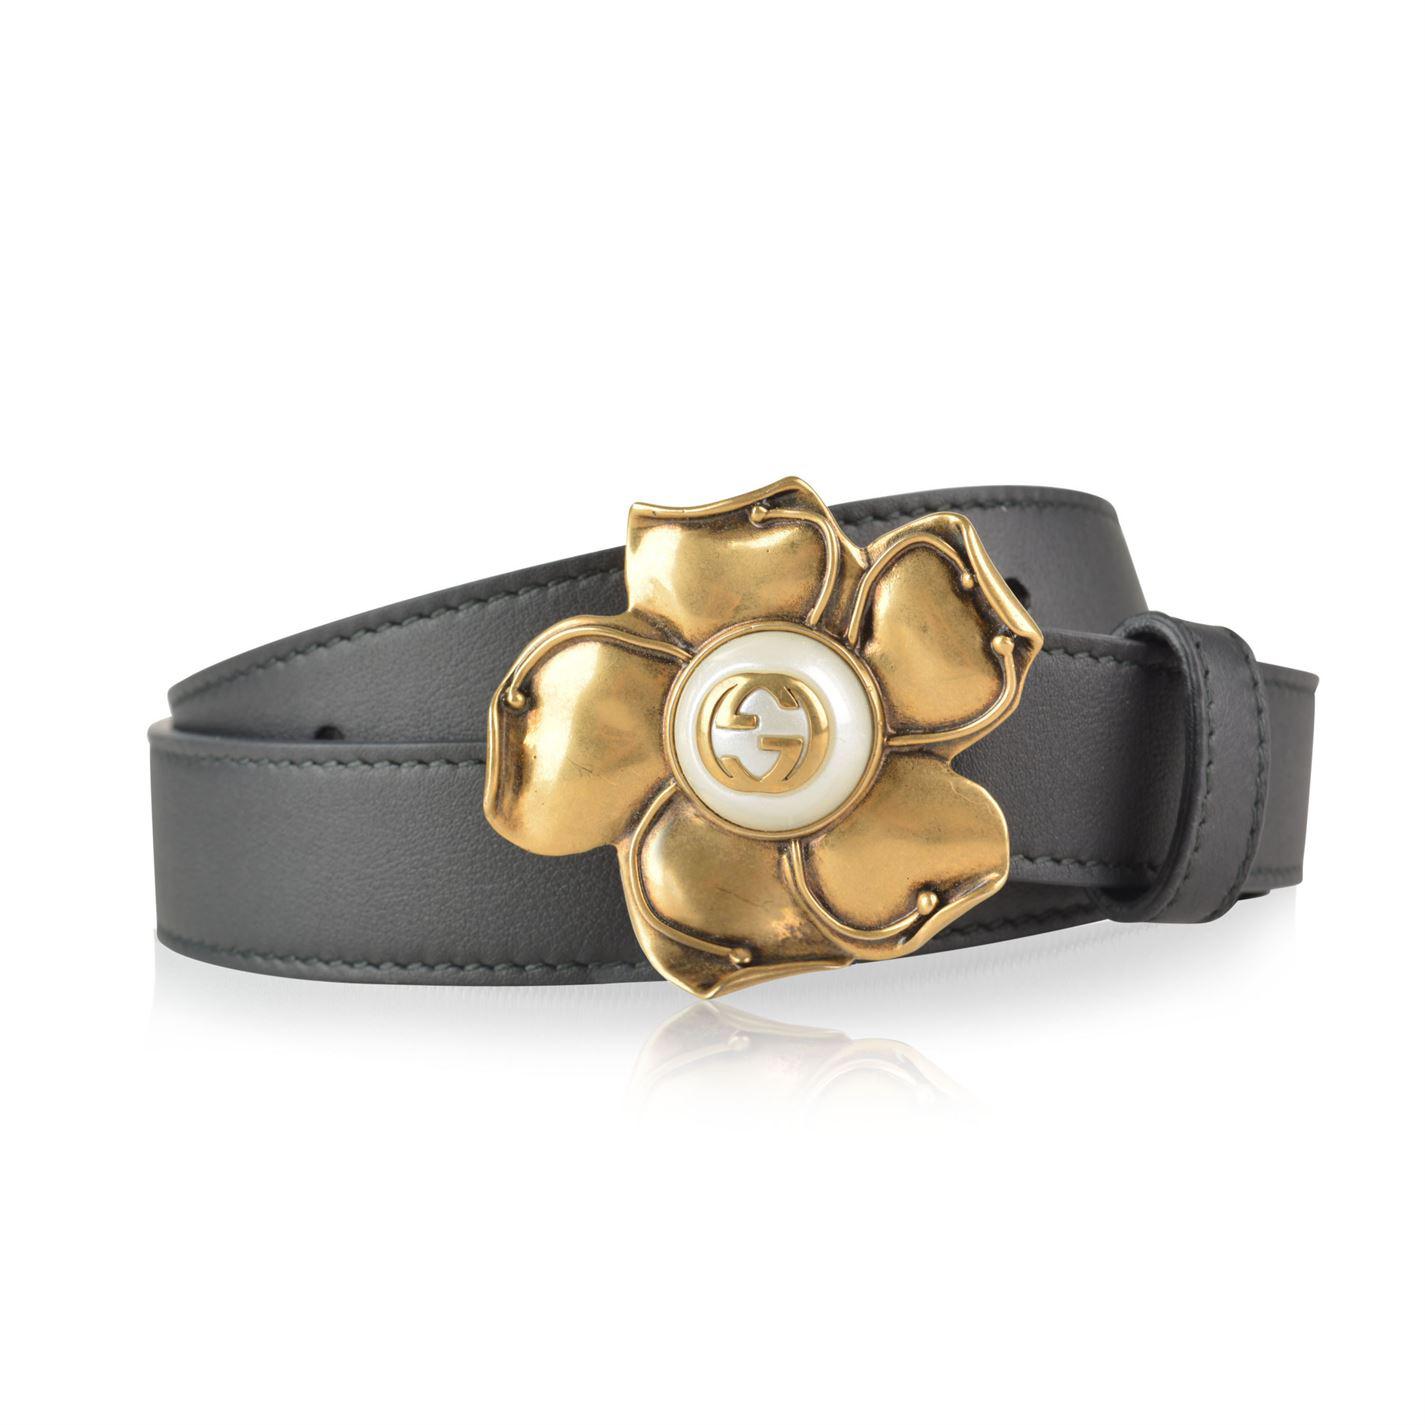 Gucci Leather Flower Buckle Belt in Black - Lyst